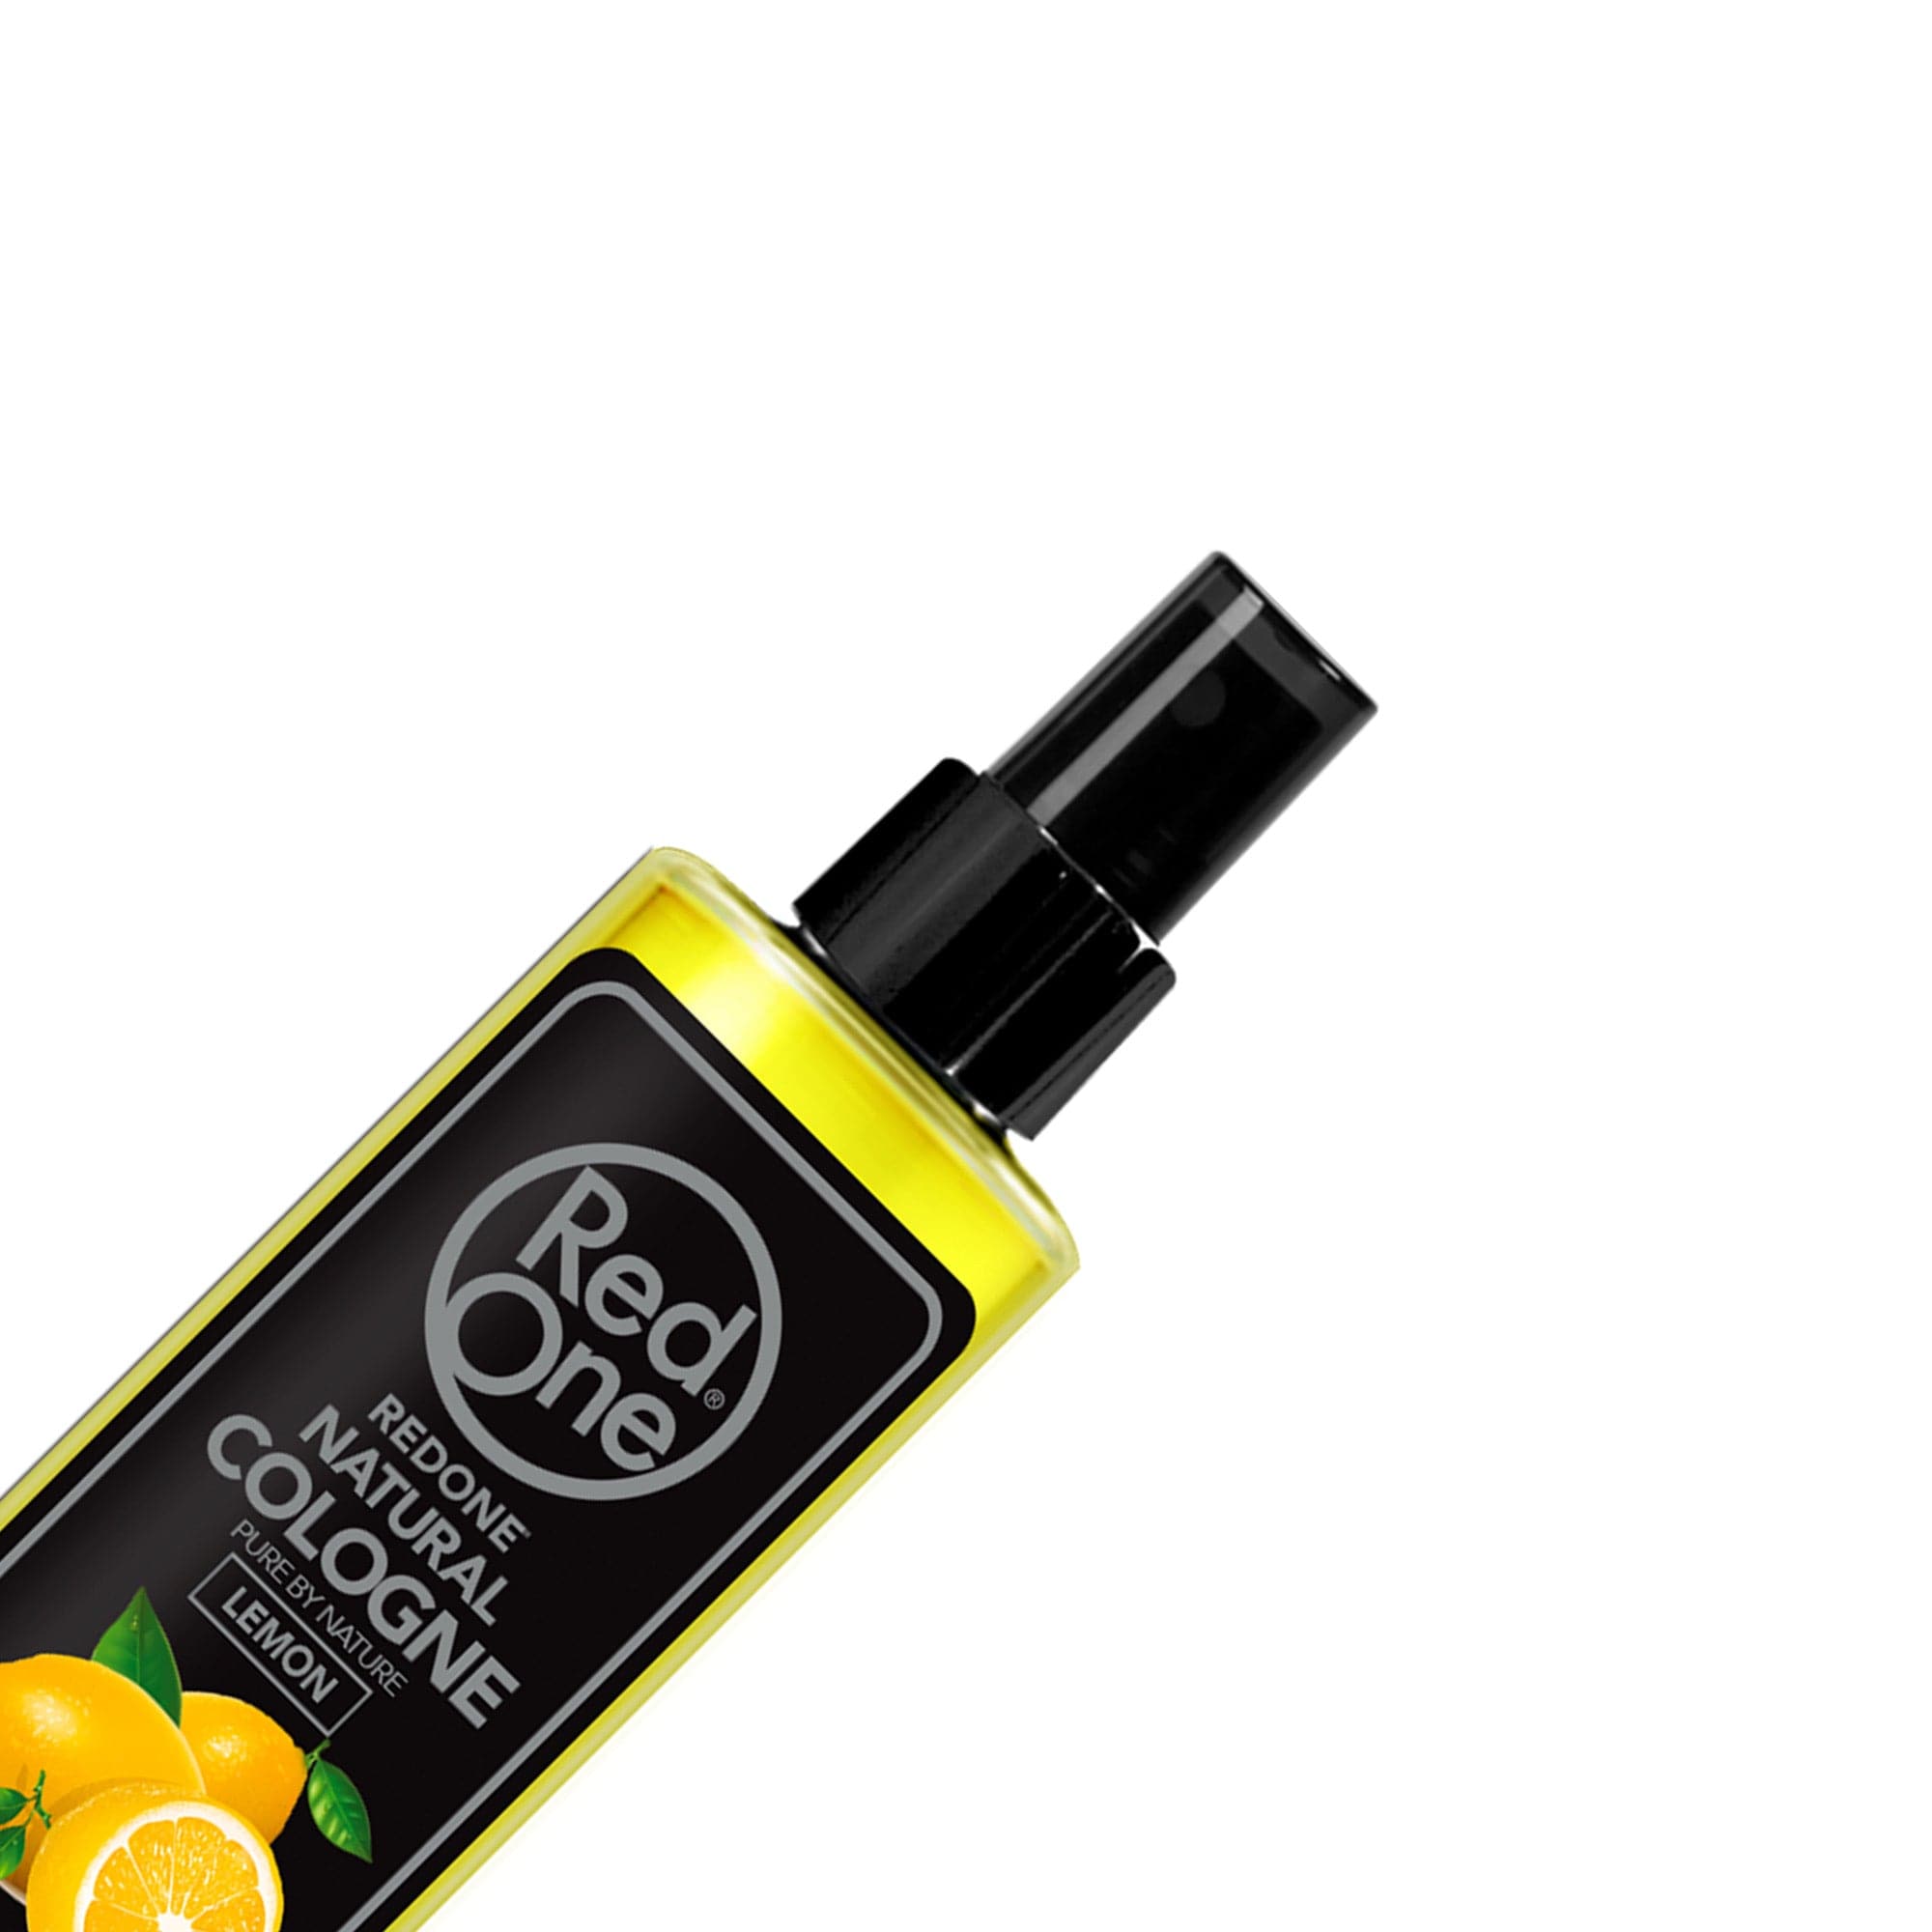 Redone - Natural Cologne Spray Lemon 150ml